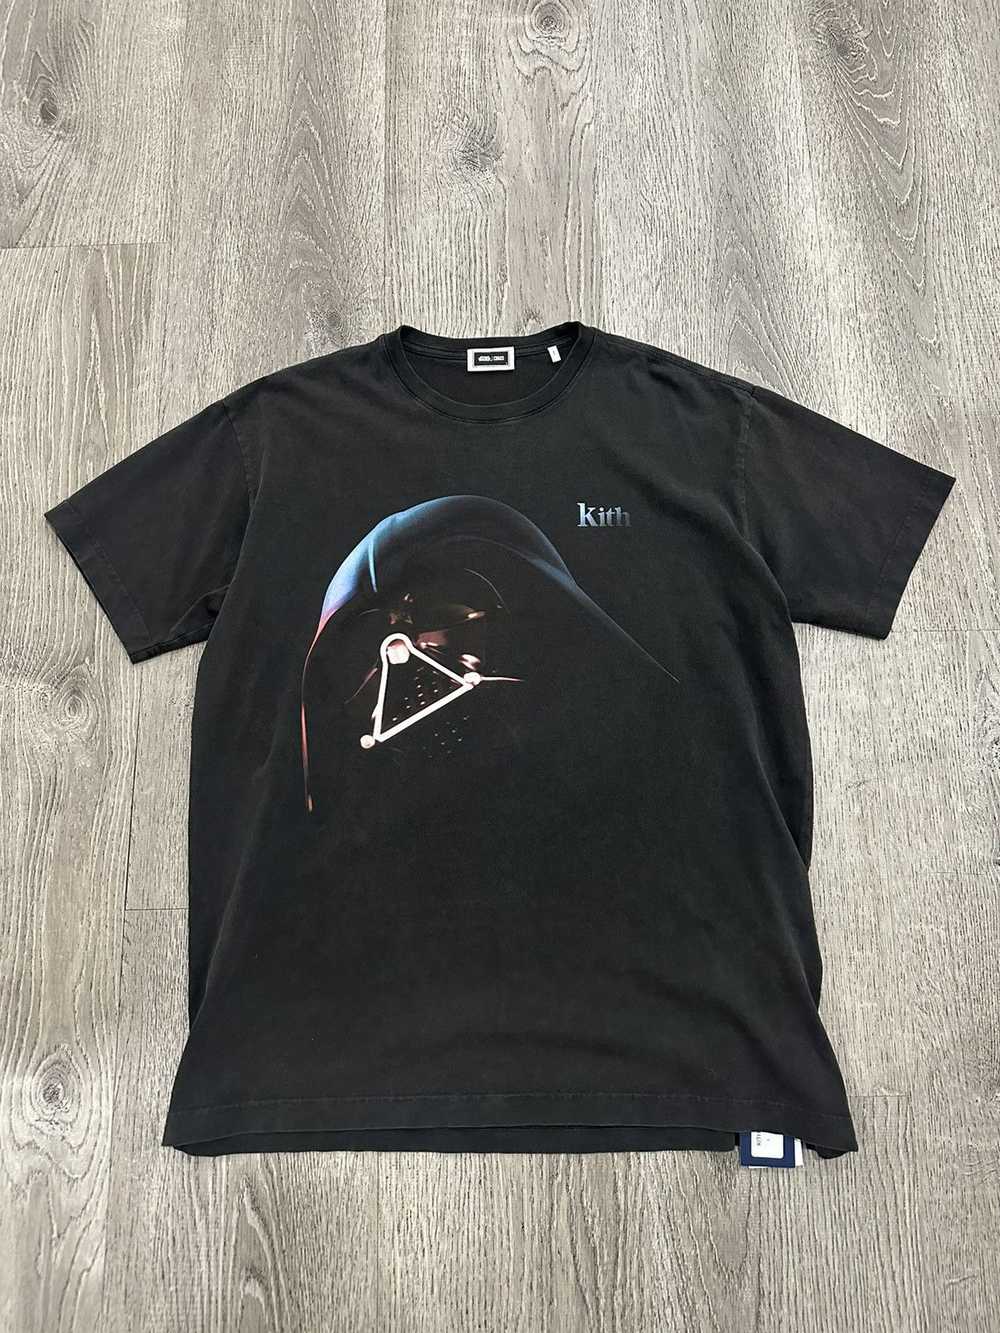 Kith Kith Star Wars Vintage T Shirt - image 2